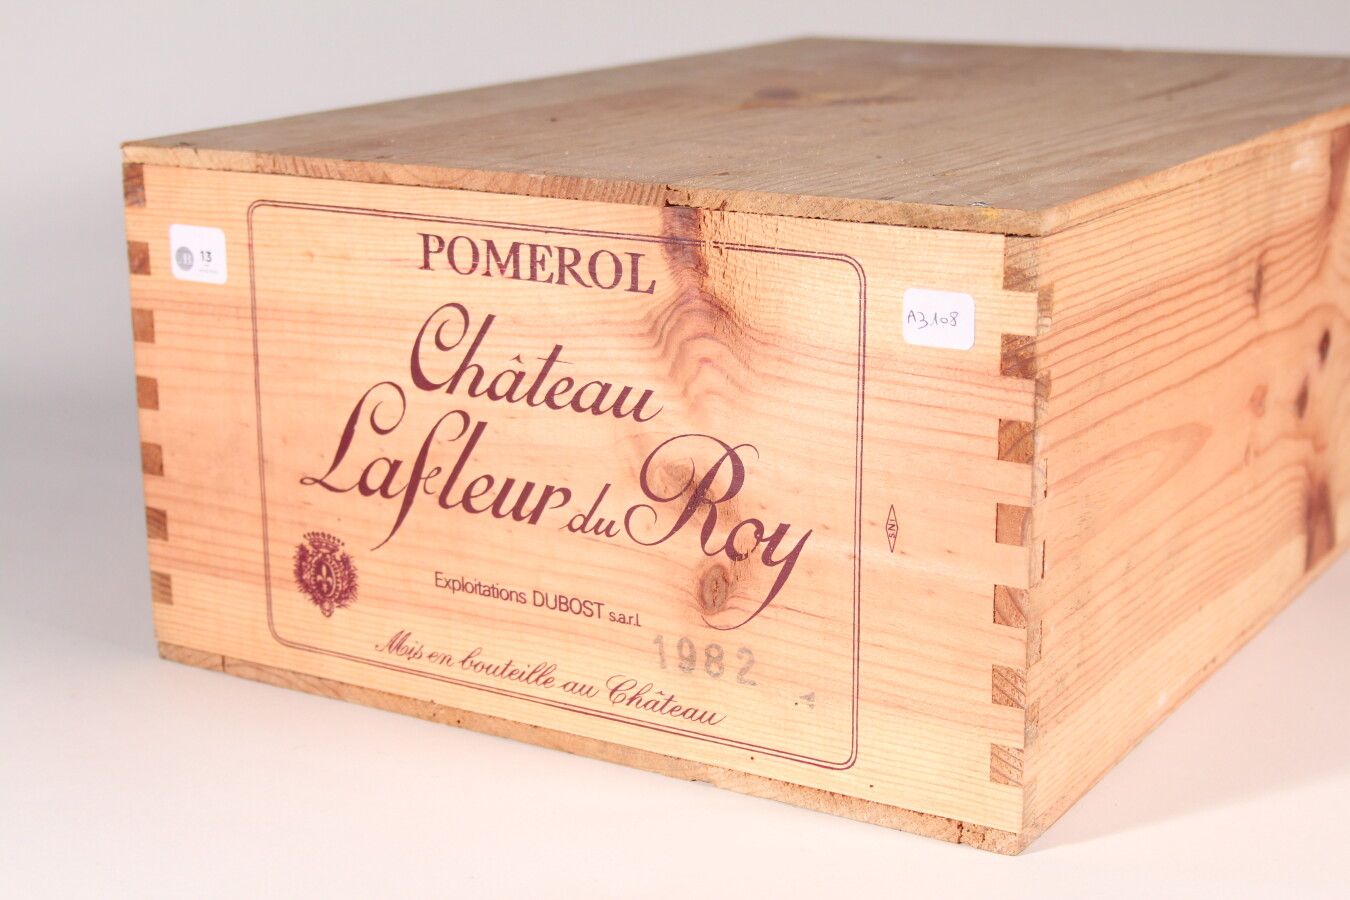 Null 1982 - Château La Fleur du Roy

Pomerol rojo - 12 botellas CBO